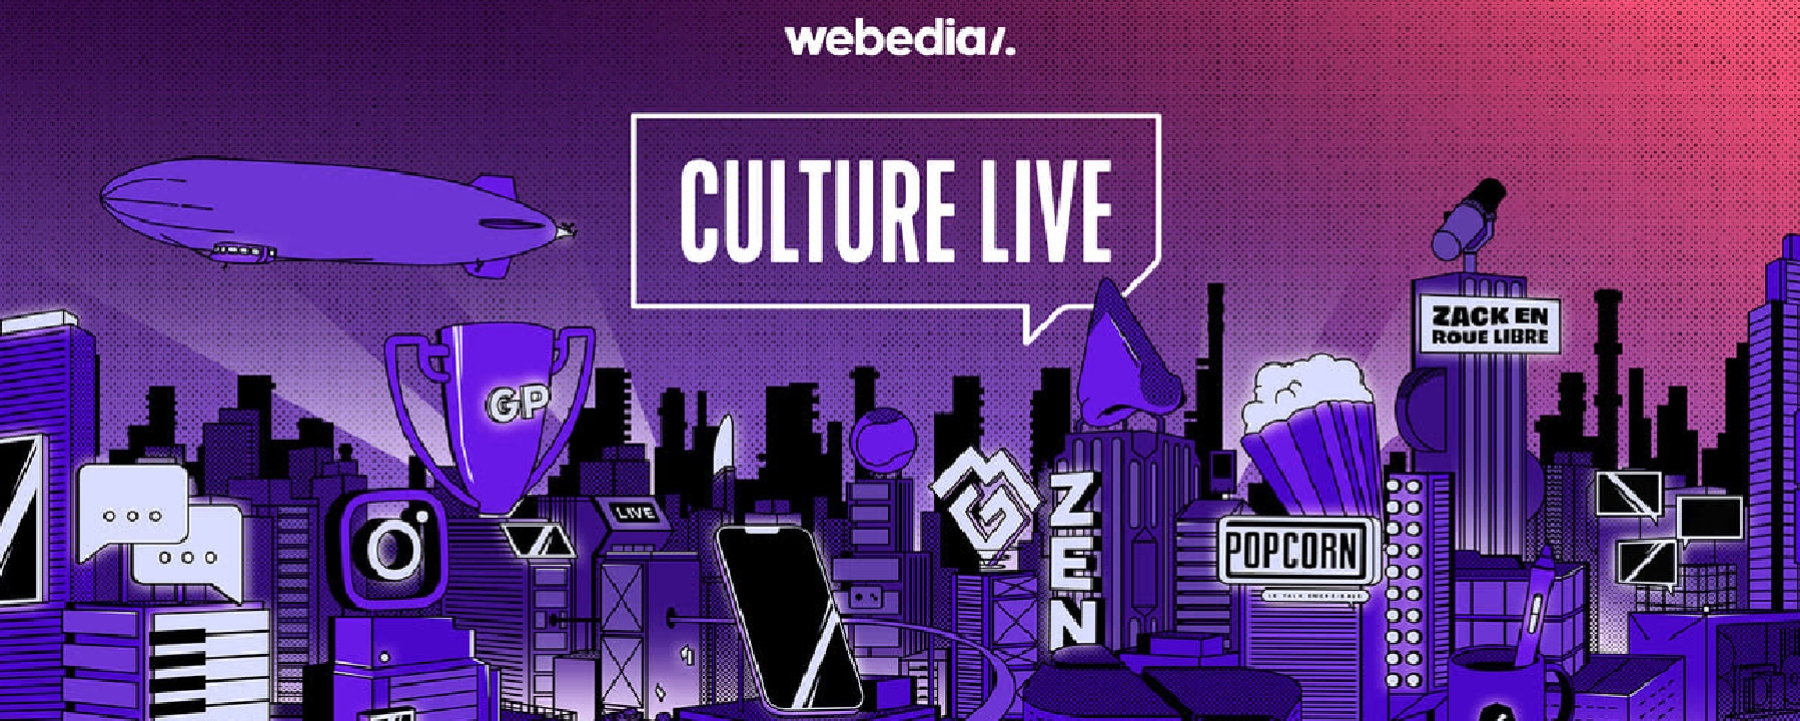 Culture Live - Webedia